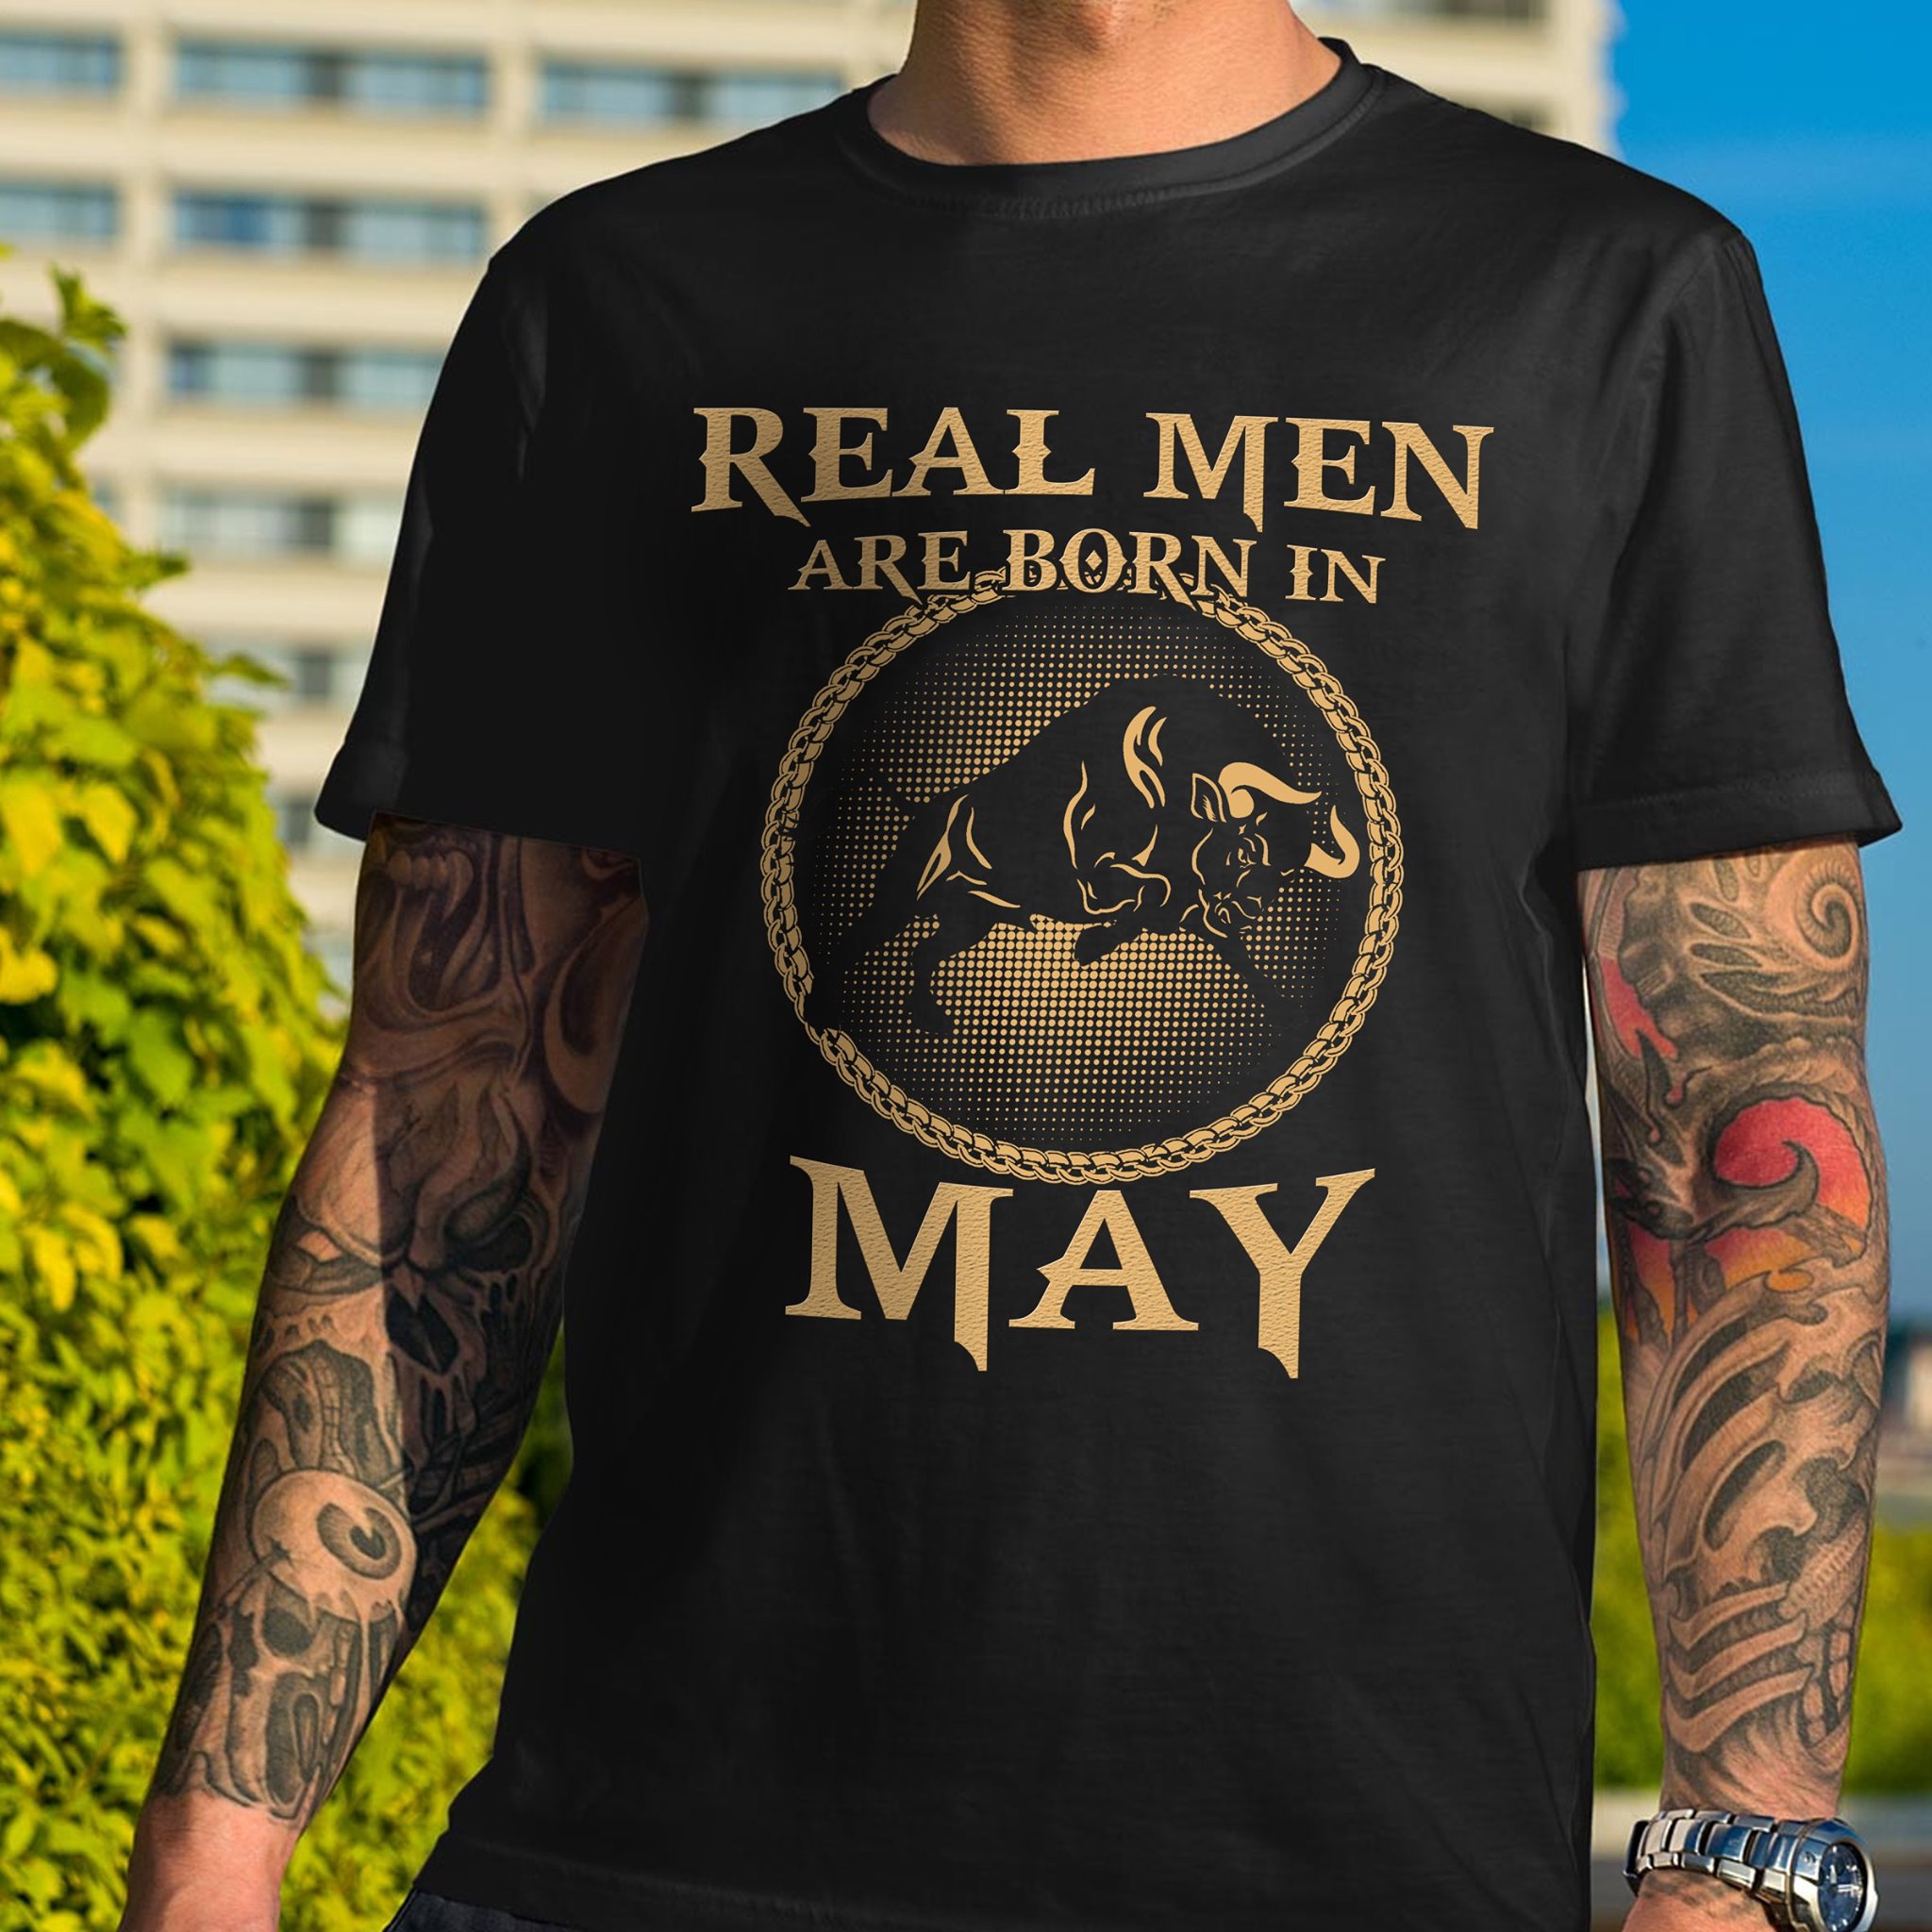 Real men are born in May - Bos gaurus